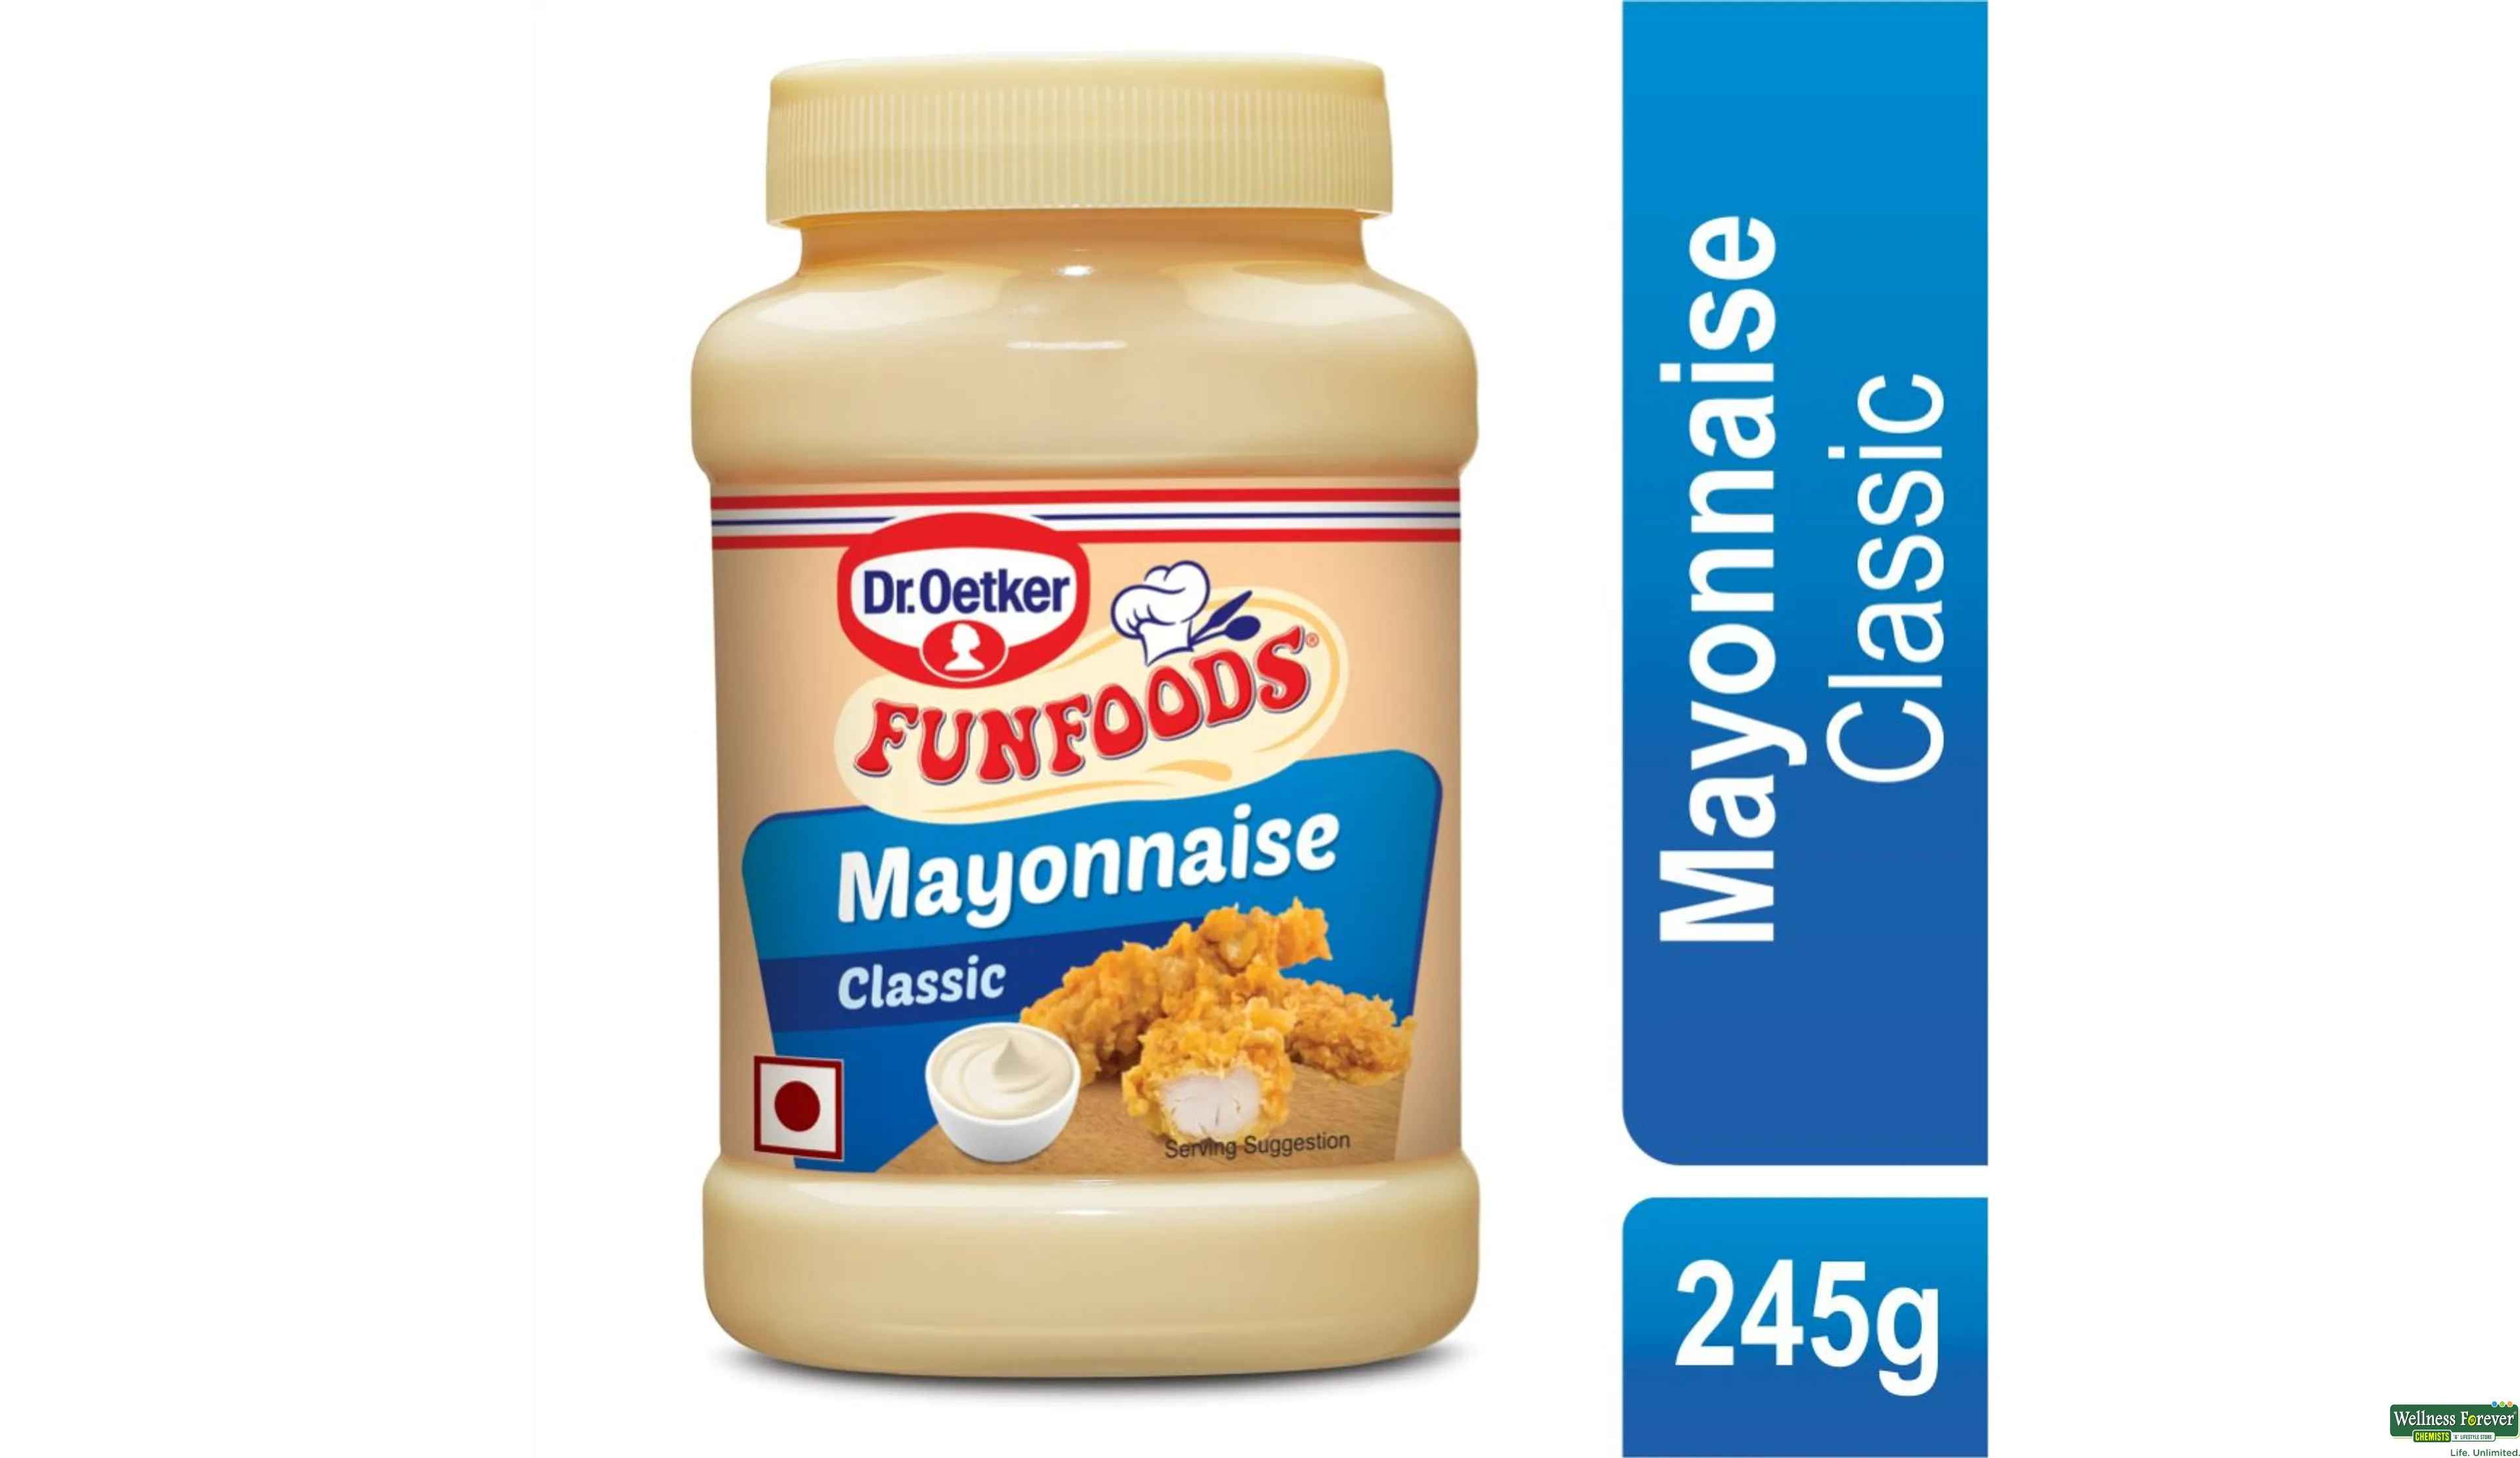 FUN FOOD MAYONNAISE CLASSIC 245GM- 1, 245GM, 